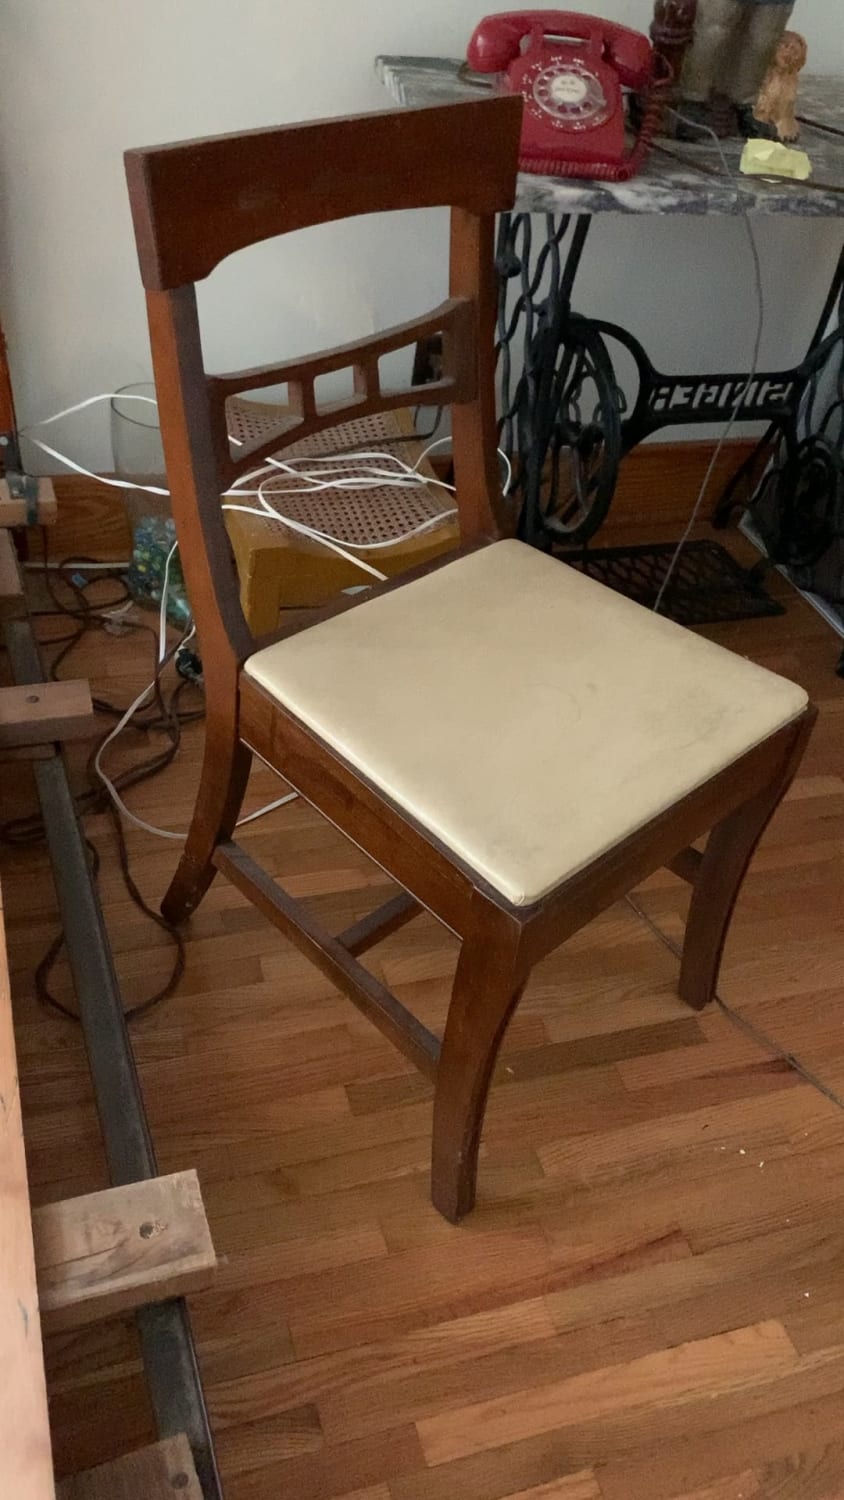 Grandma’s sewing chair